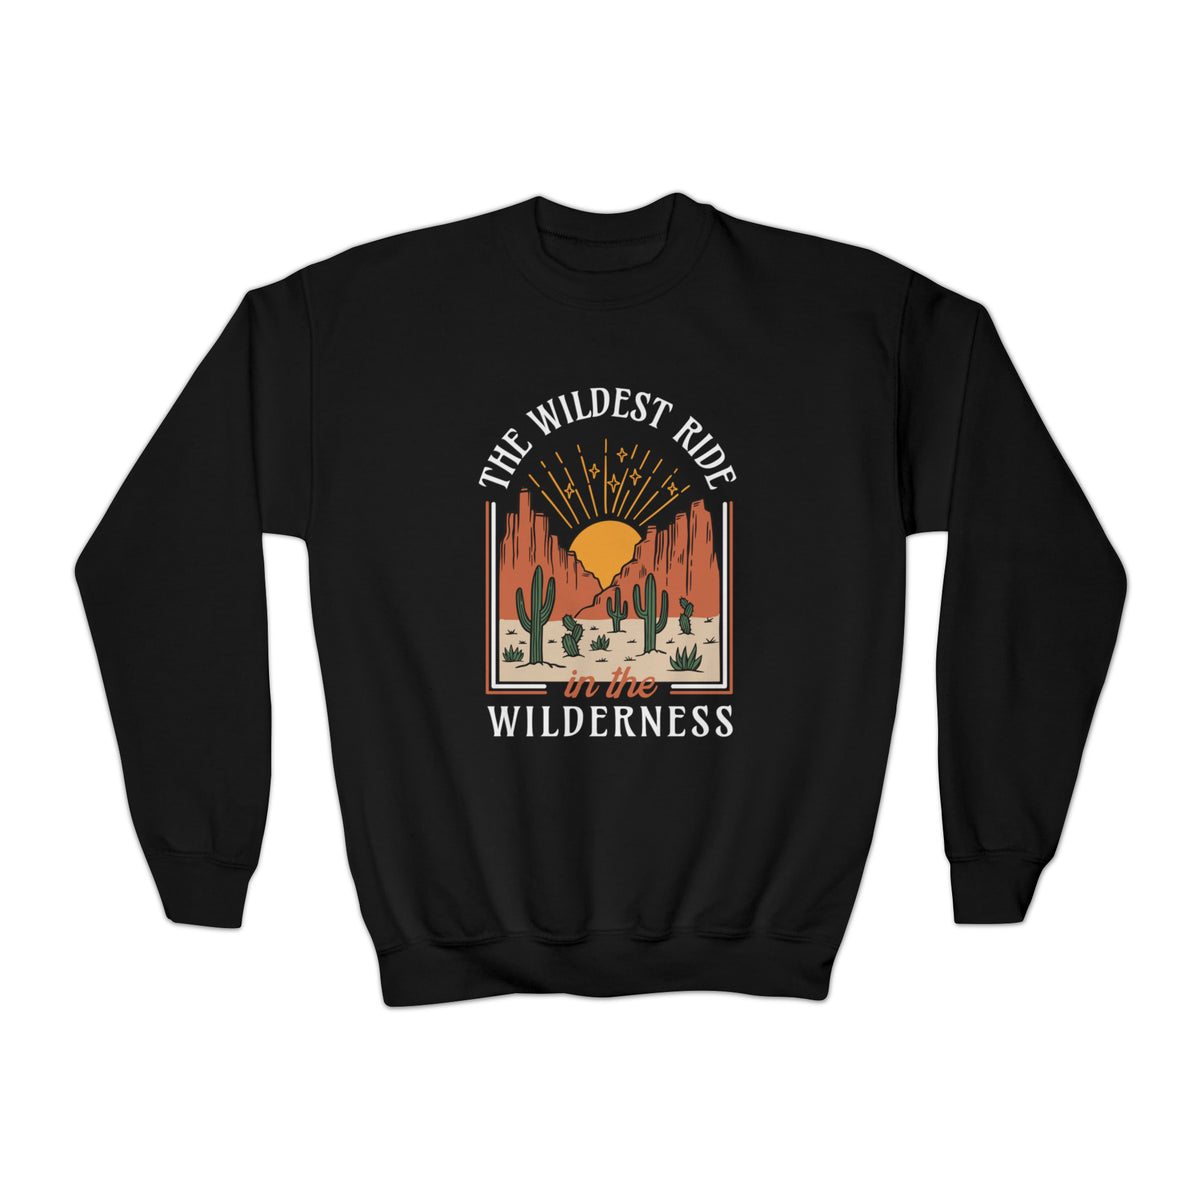 The Wildest Ride In The Wilderness Gildan Youth Crewneck Sweatshirt